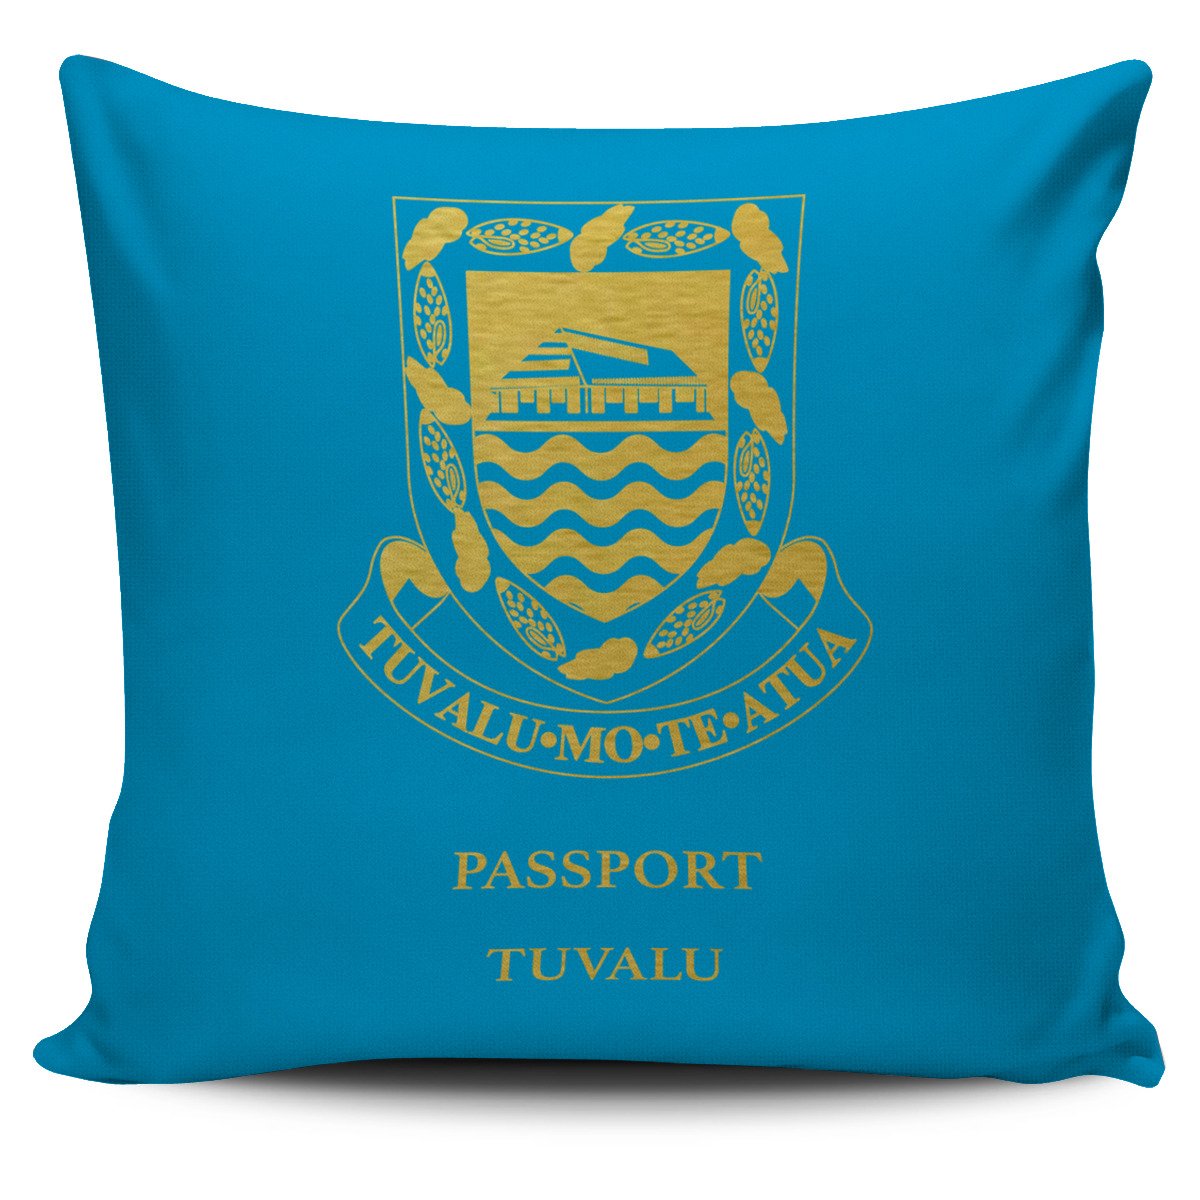 Tuvalu Pillow Cover - Passport Version Tuvalu One Size Blue - Polynesian Pride